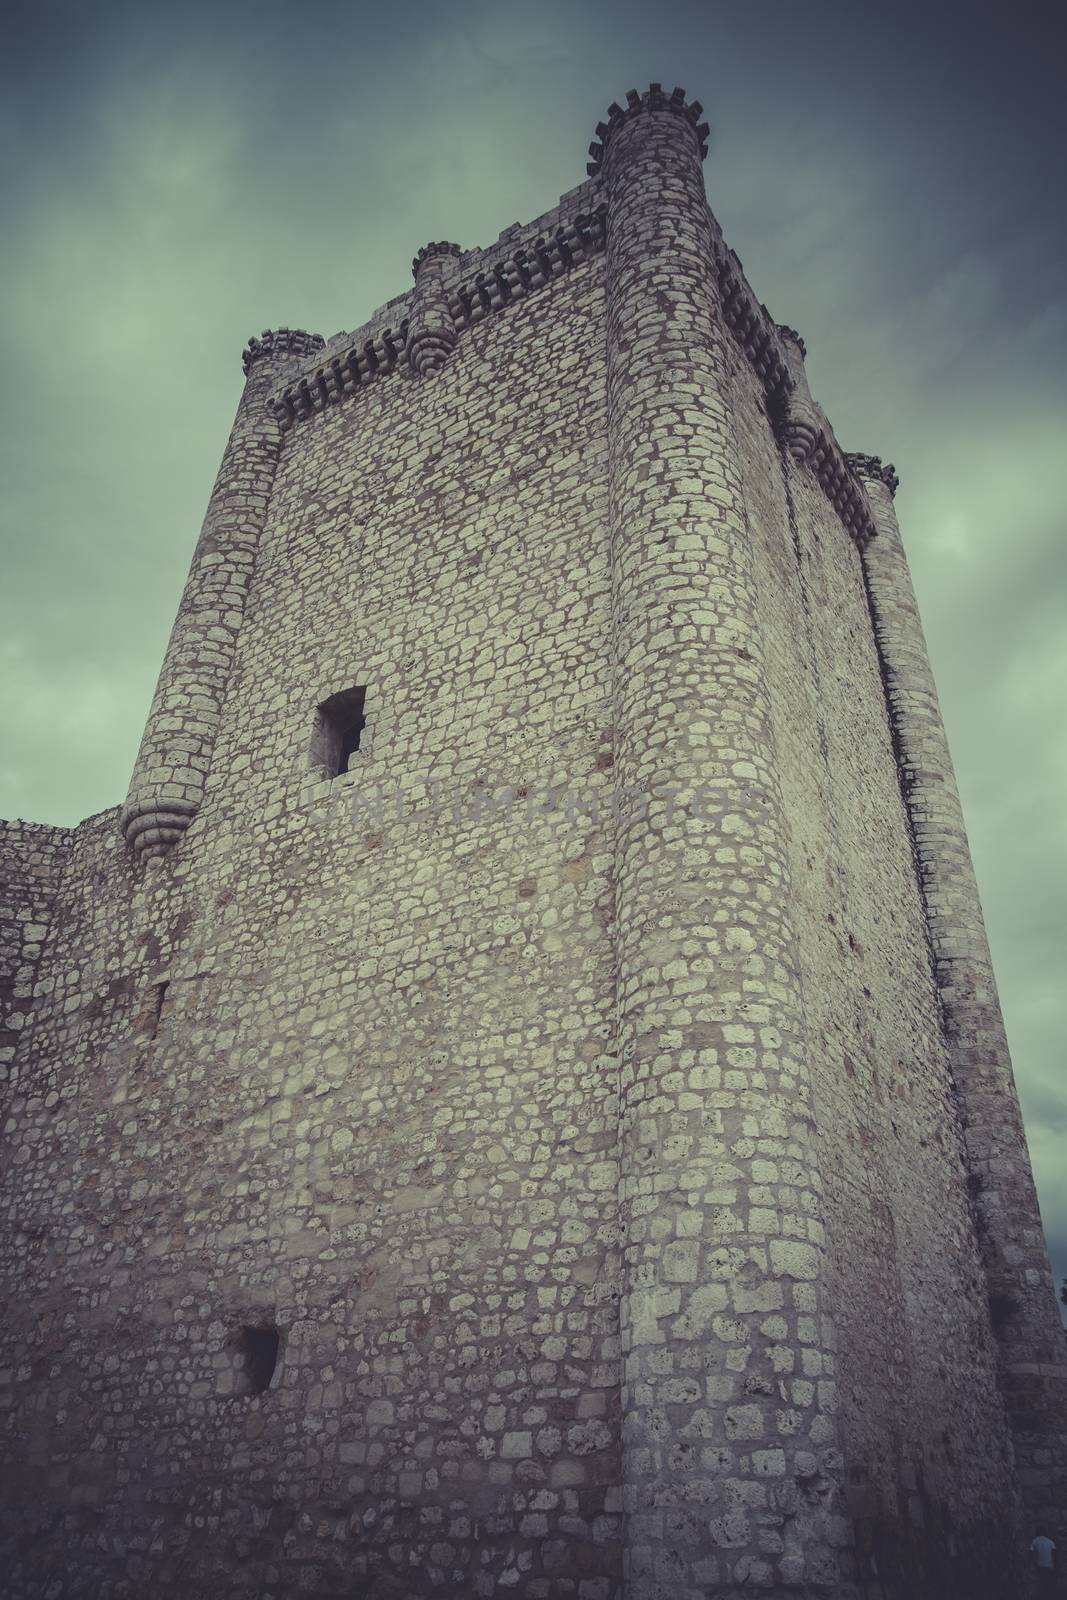 Medieval castle, spain architecture by FernandoCortes